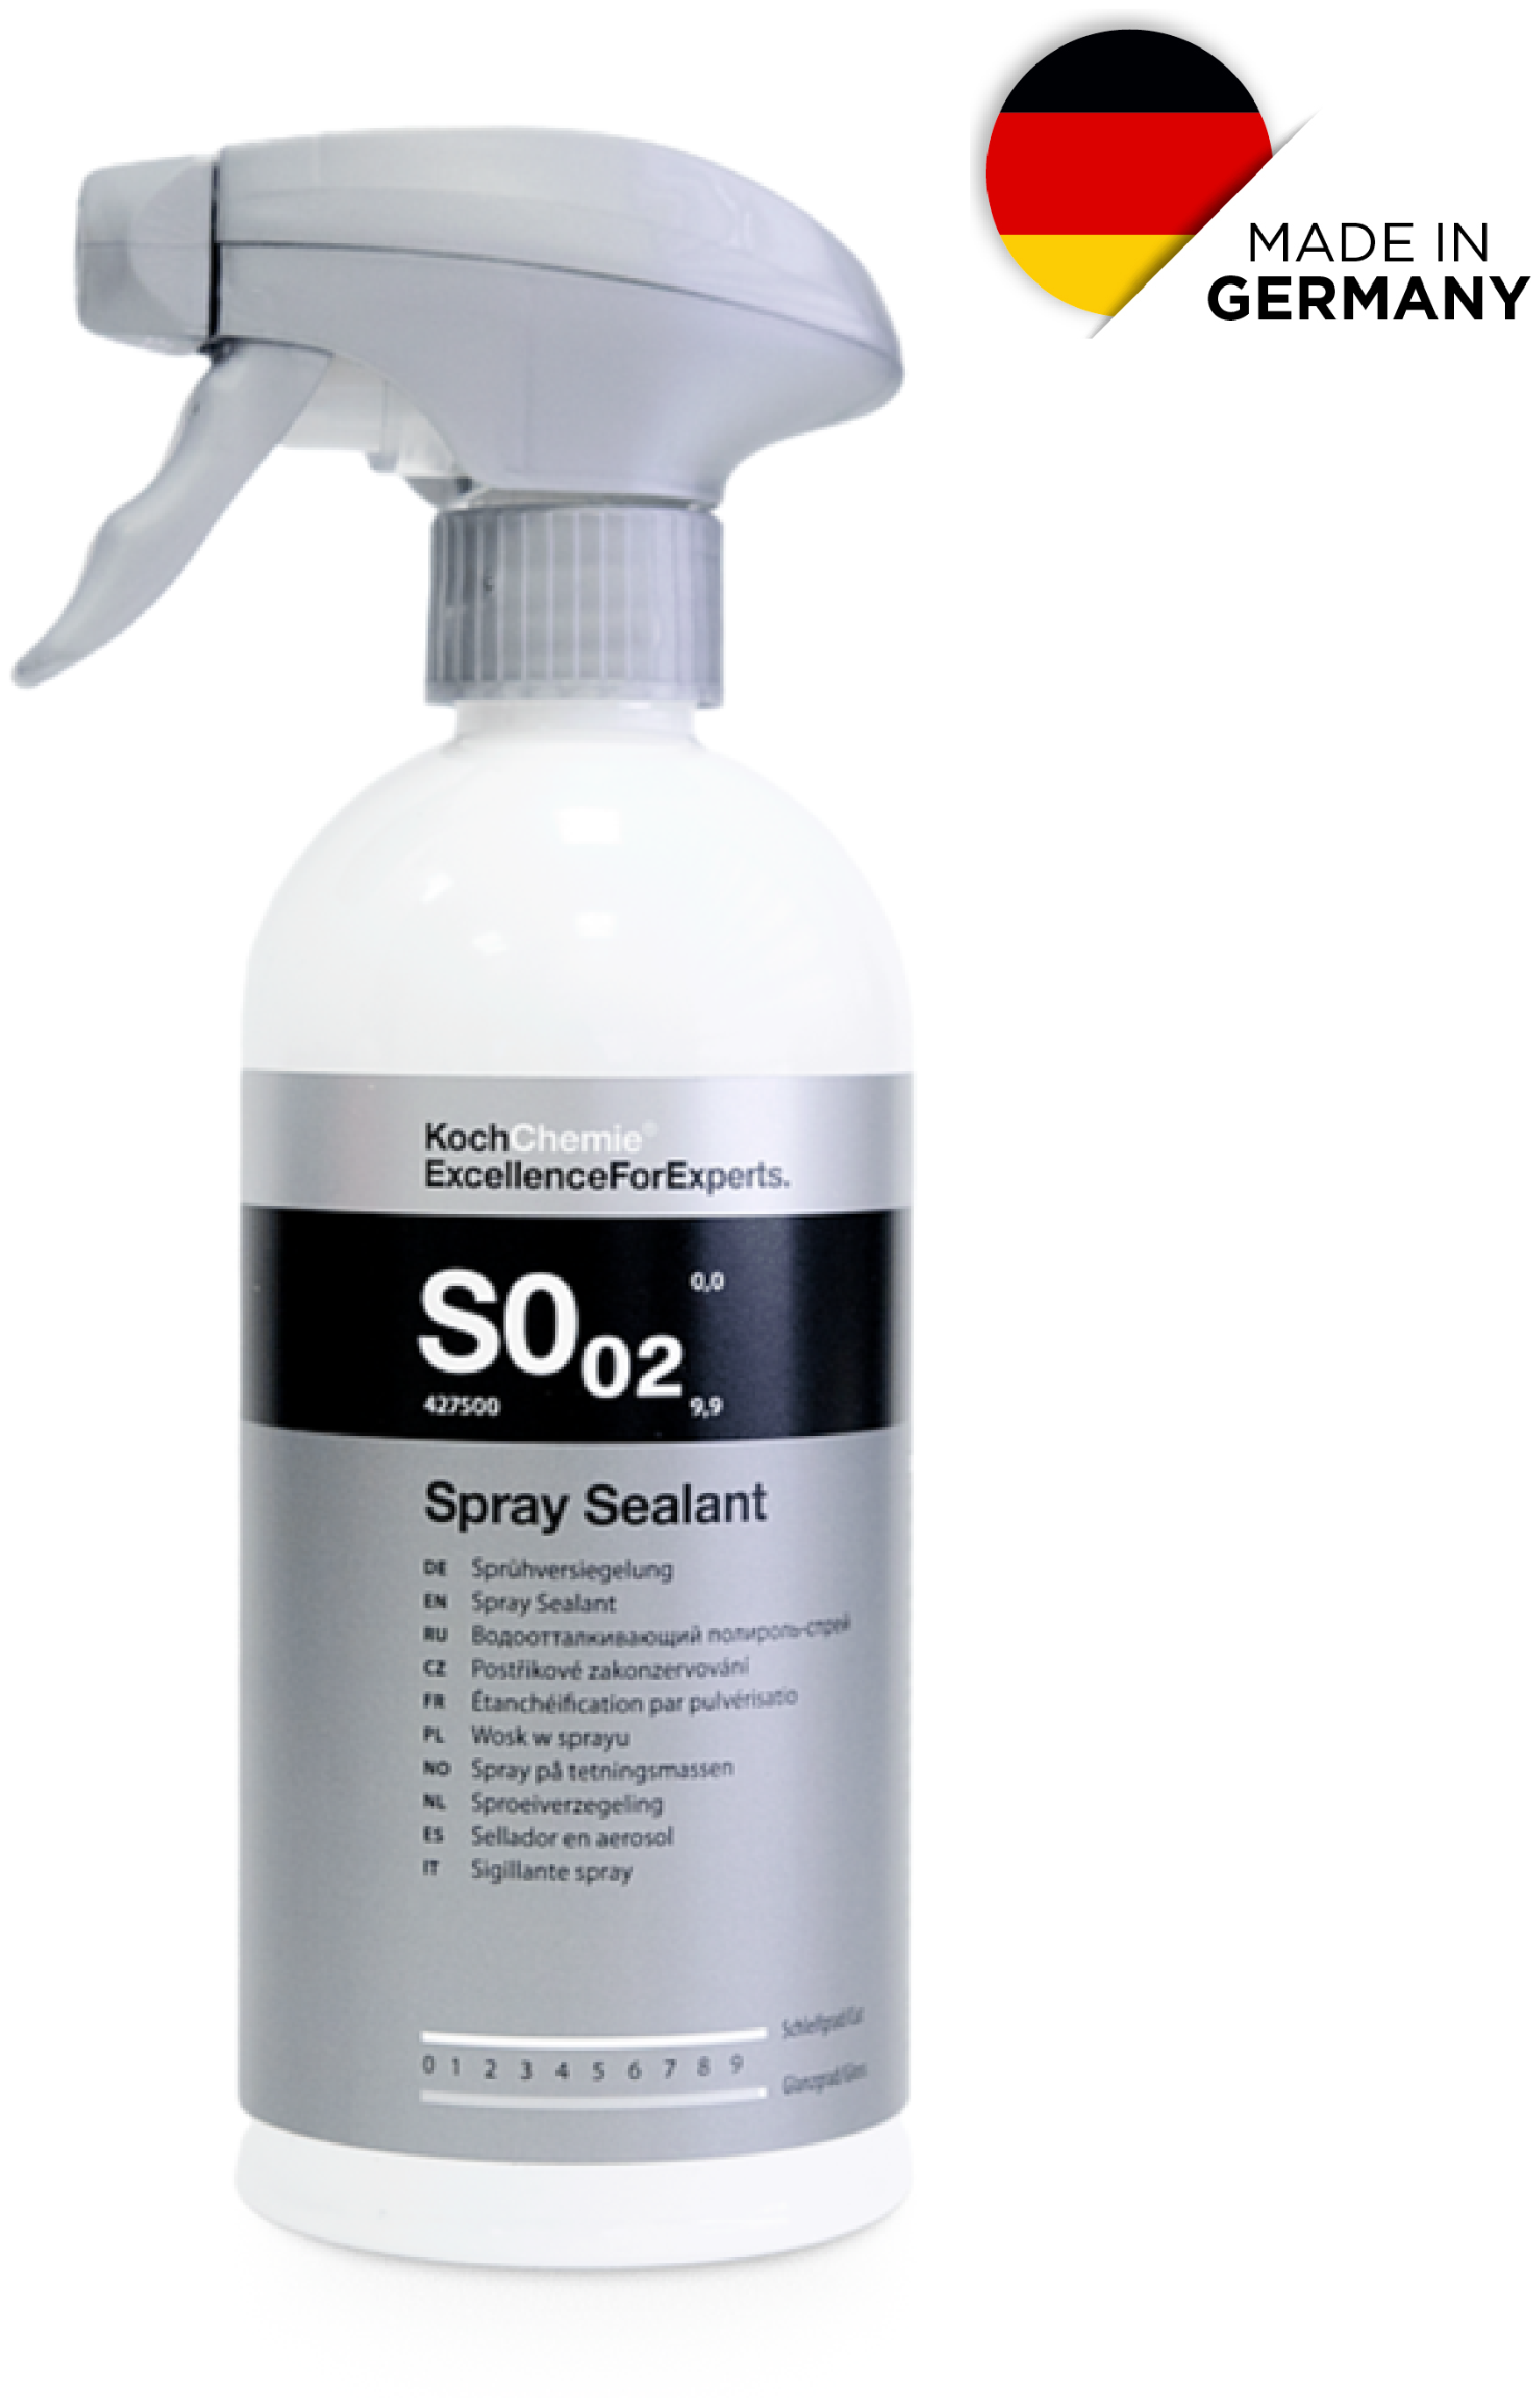 KCx Spray Sealant S0.02 - Водоотталкивающий полироль-спрей. № 427500 (500мл) Koch Chemie